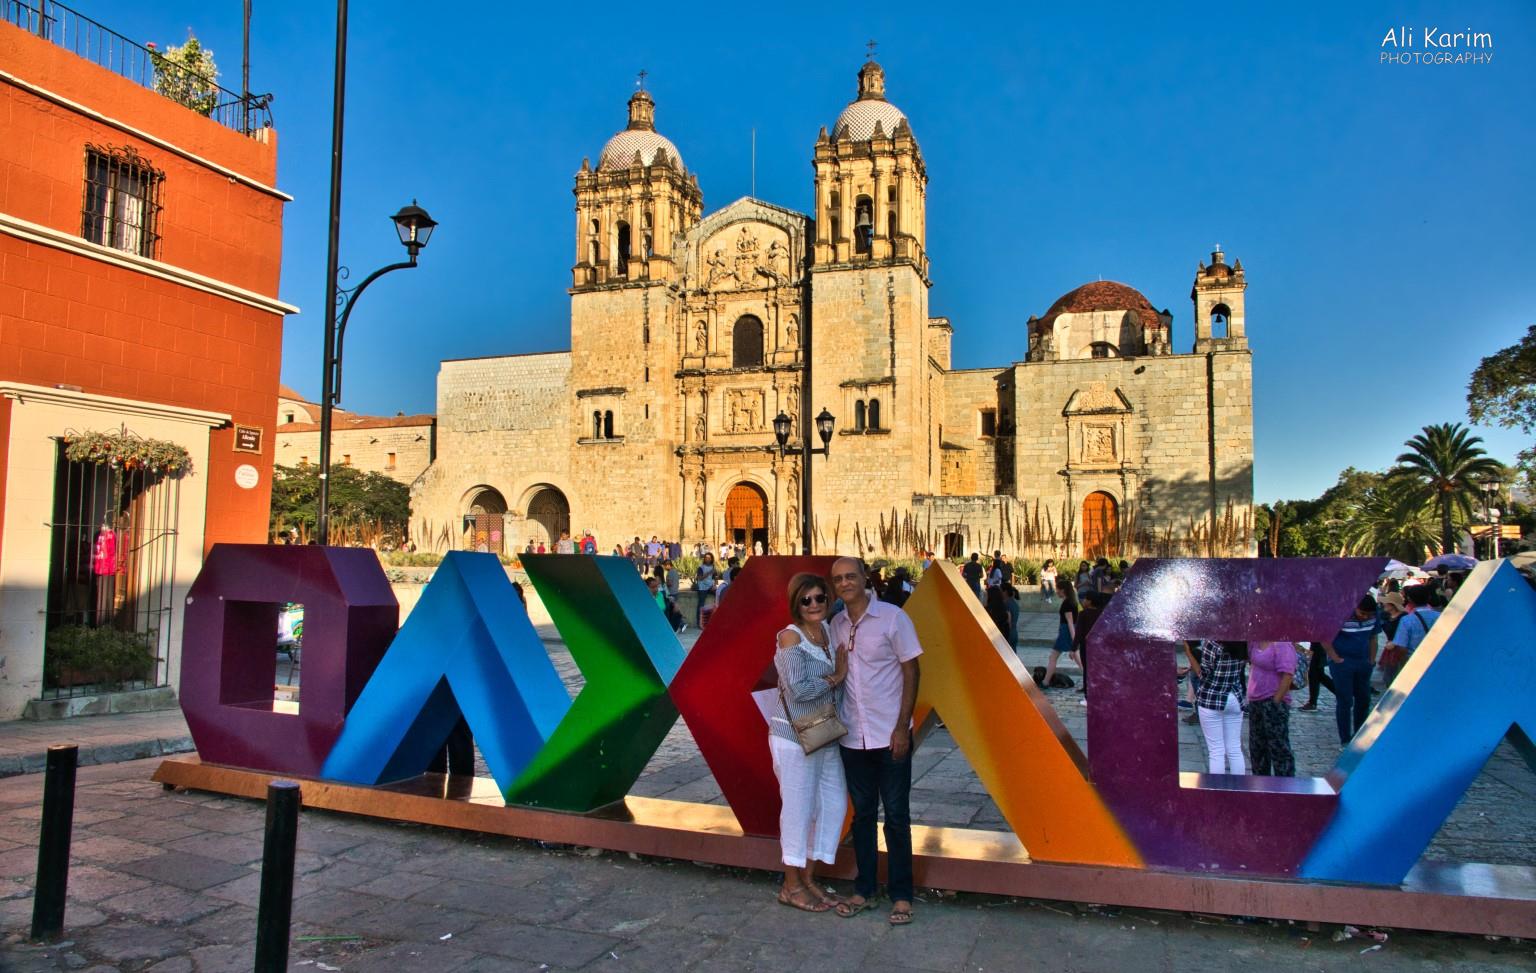 Oaxaca, Mexico Impressive Church of Santo Domingo de Guzman (no relation to El Chapo :) )